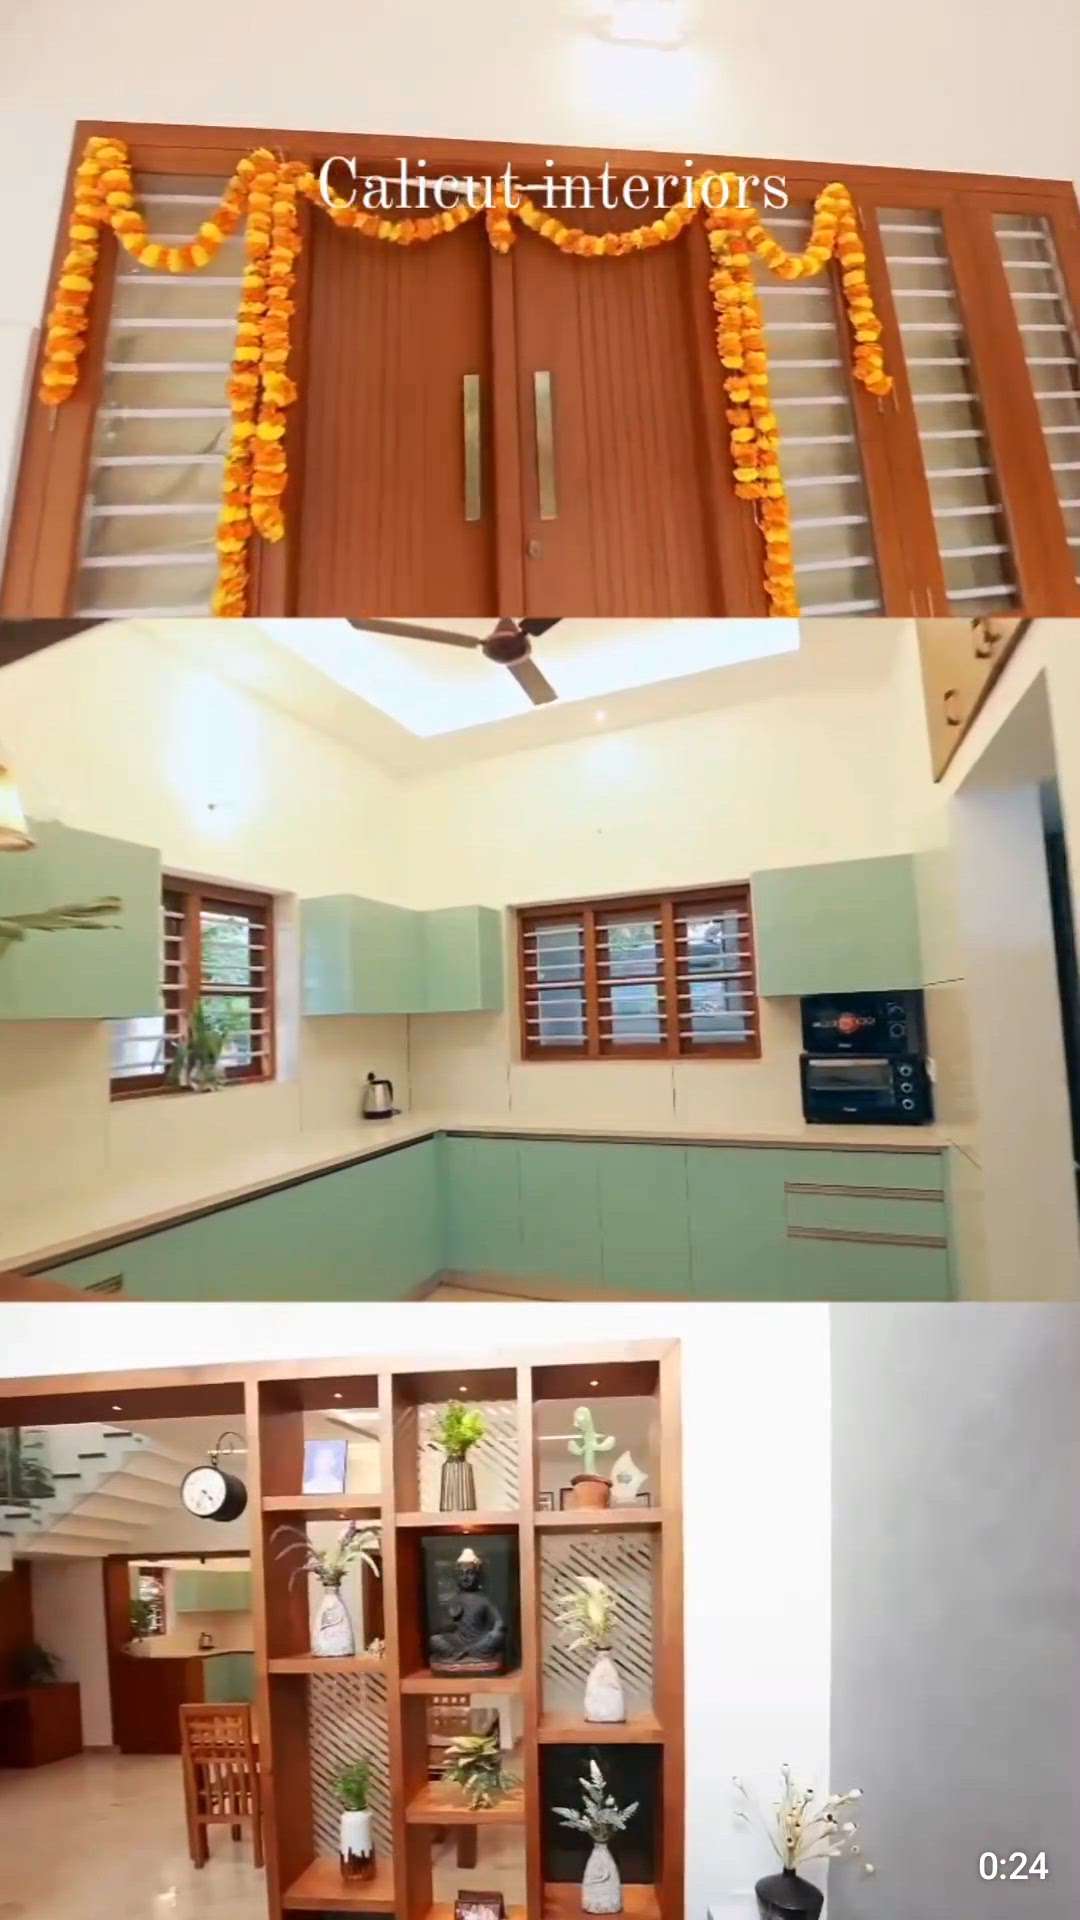 Calicut interiors. 9656423283
#HouseDesigns 
#HomeDecor 
#CalicutConstructions&Consultants 
#calicutinteriors
#Kozhikode 
#Kannur